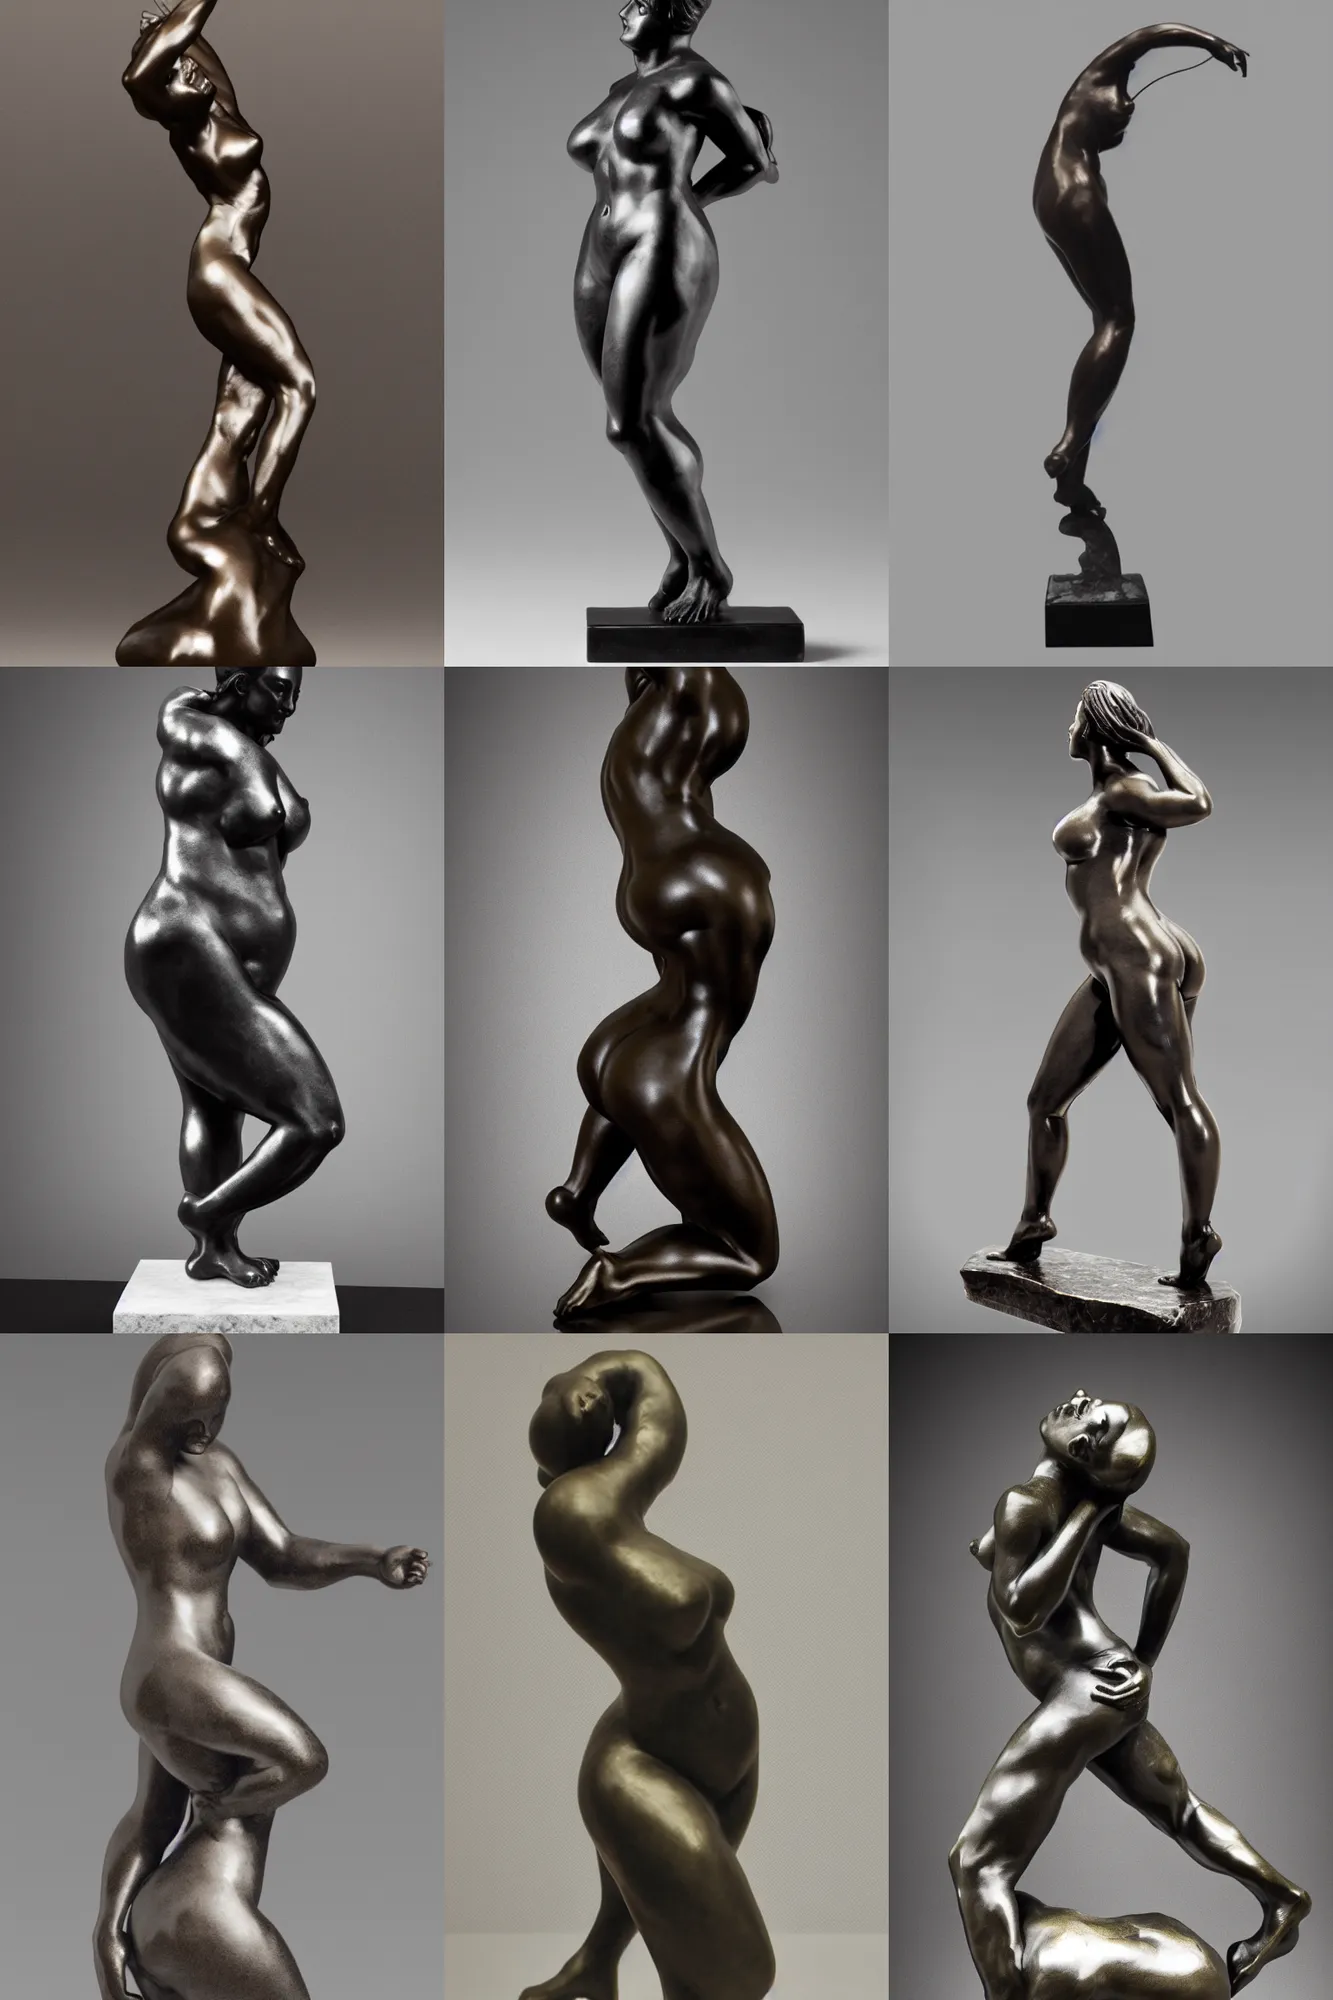 Prompt: black and white photo rodin curvy female bronze figure . Full body shot; hyper realism dramatic lighting, high detail 4K